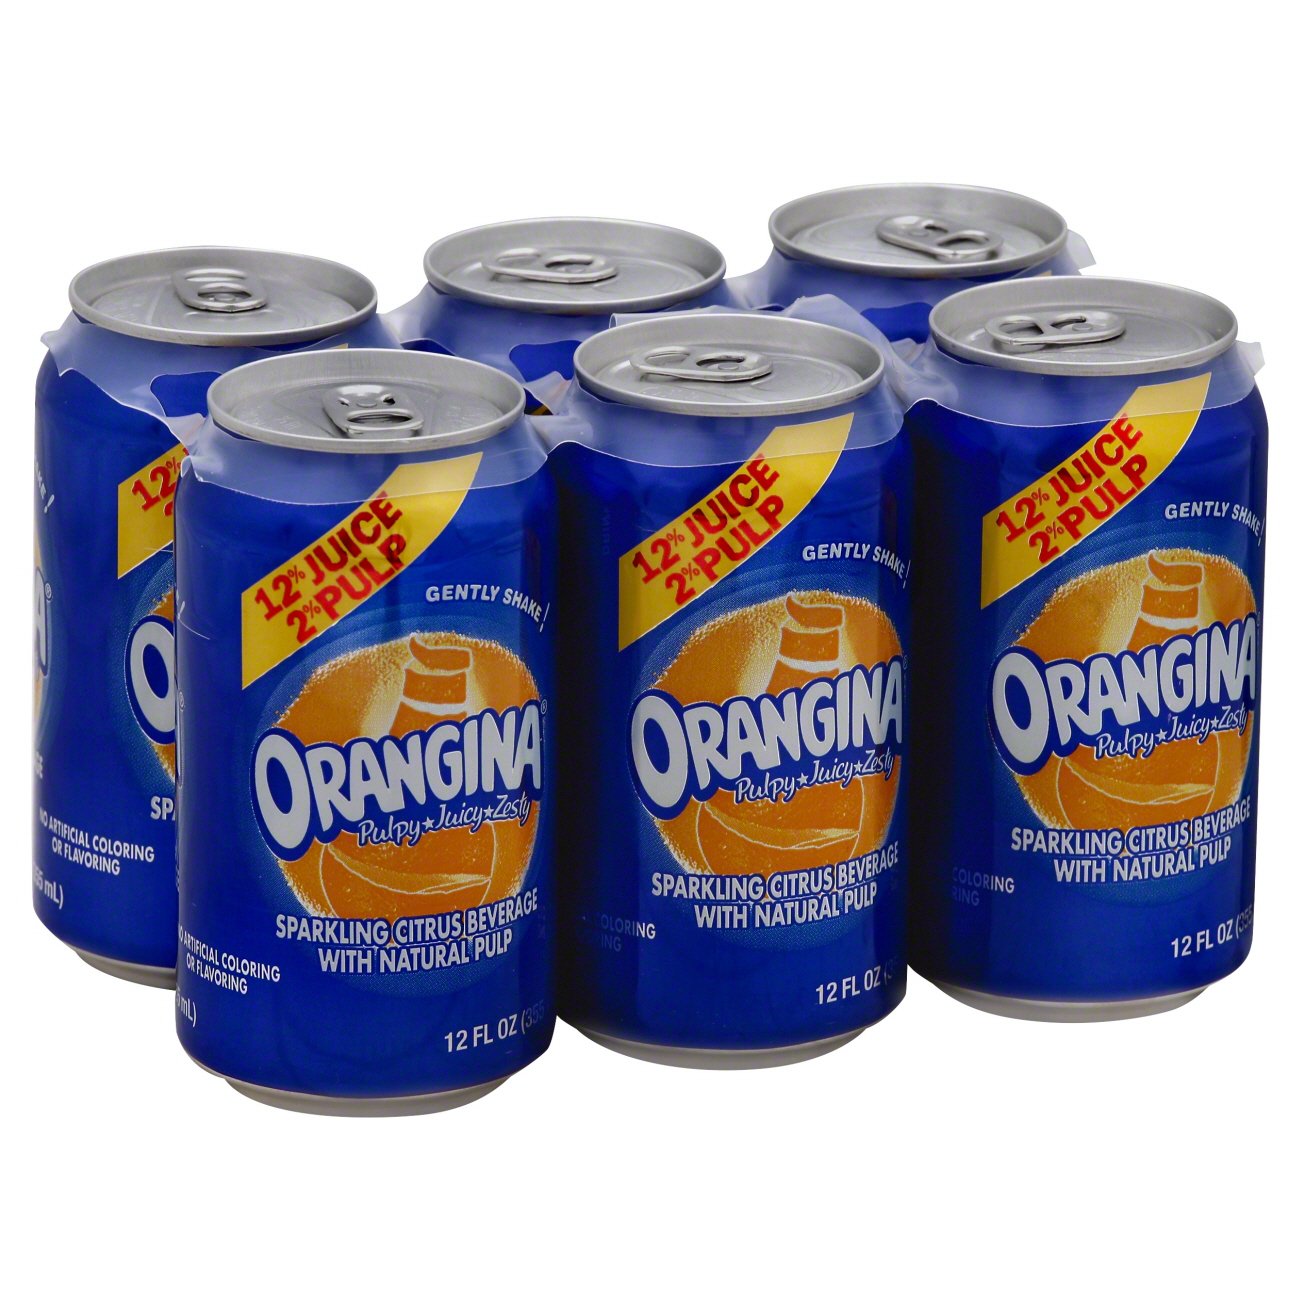 Orangina Sparkling Citrus Beverage with Natural Pulp 12 oz Cans